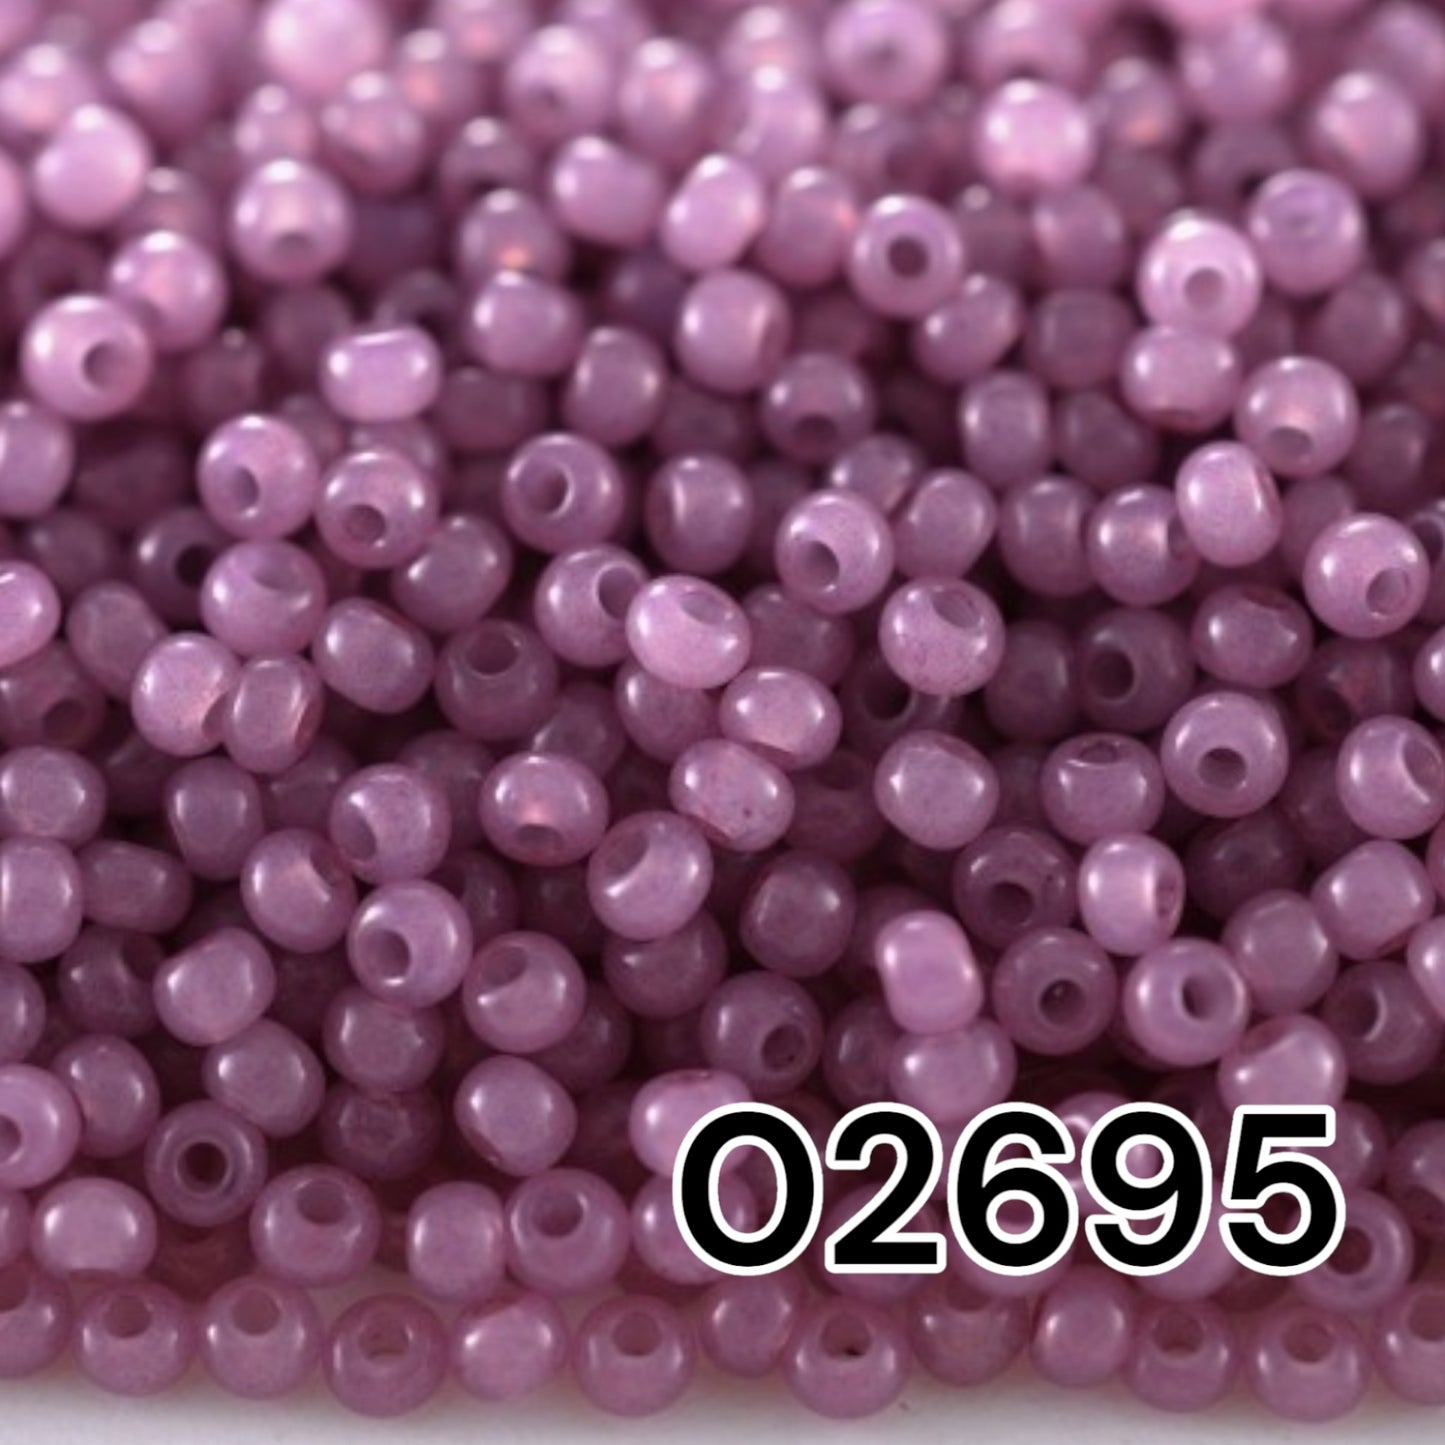 02695 Czech seed beads PRECIOSA round 10/0 amethyst. Alabaster - Solgel Dyed.